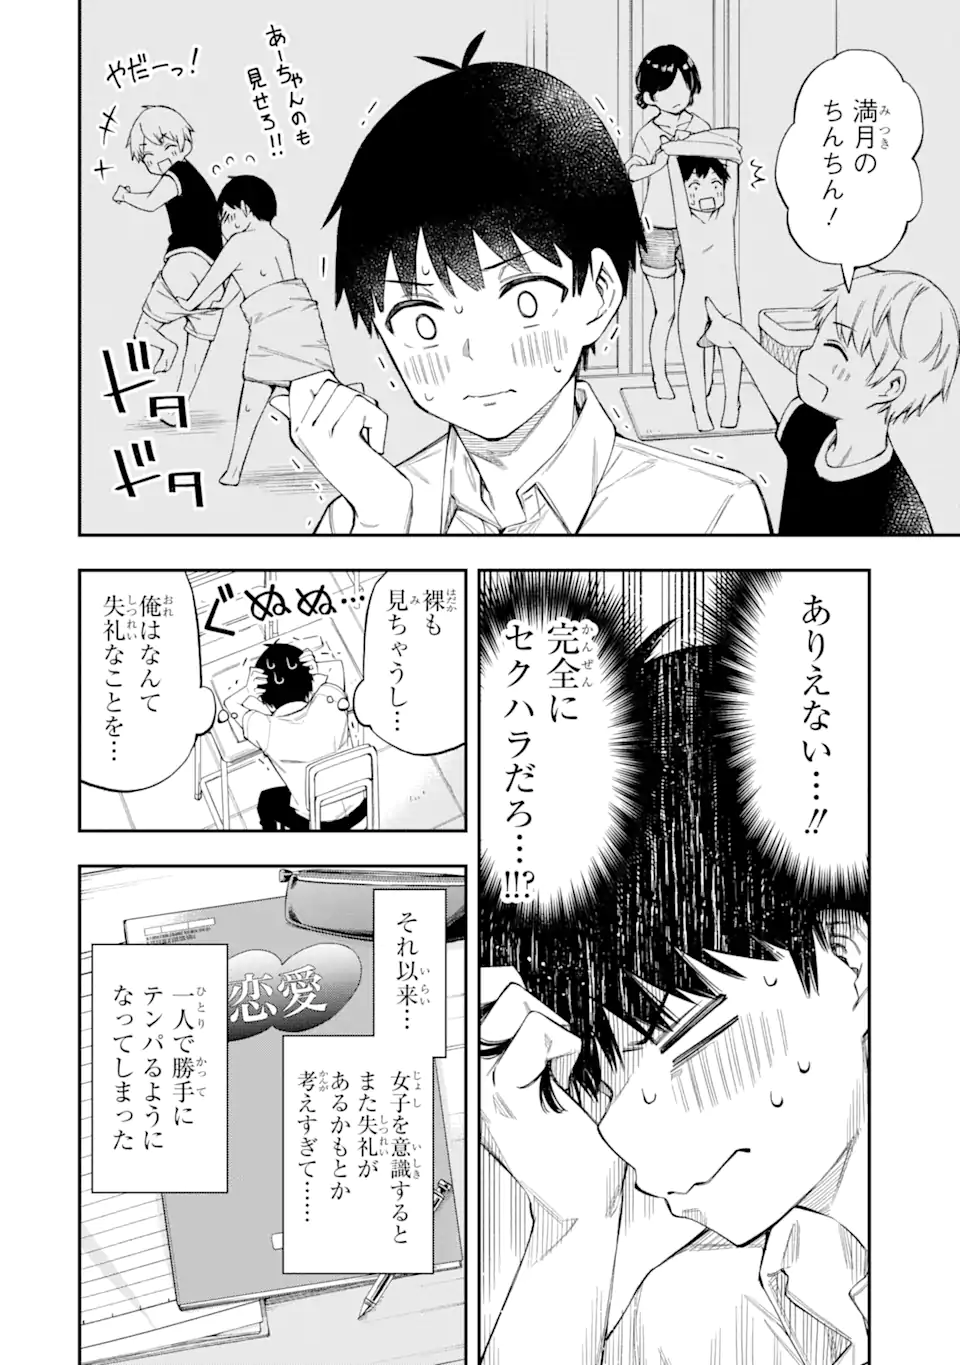 Renai no Jugyou - Chapter 1.1 - Page 22